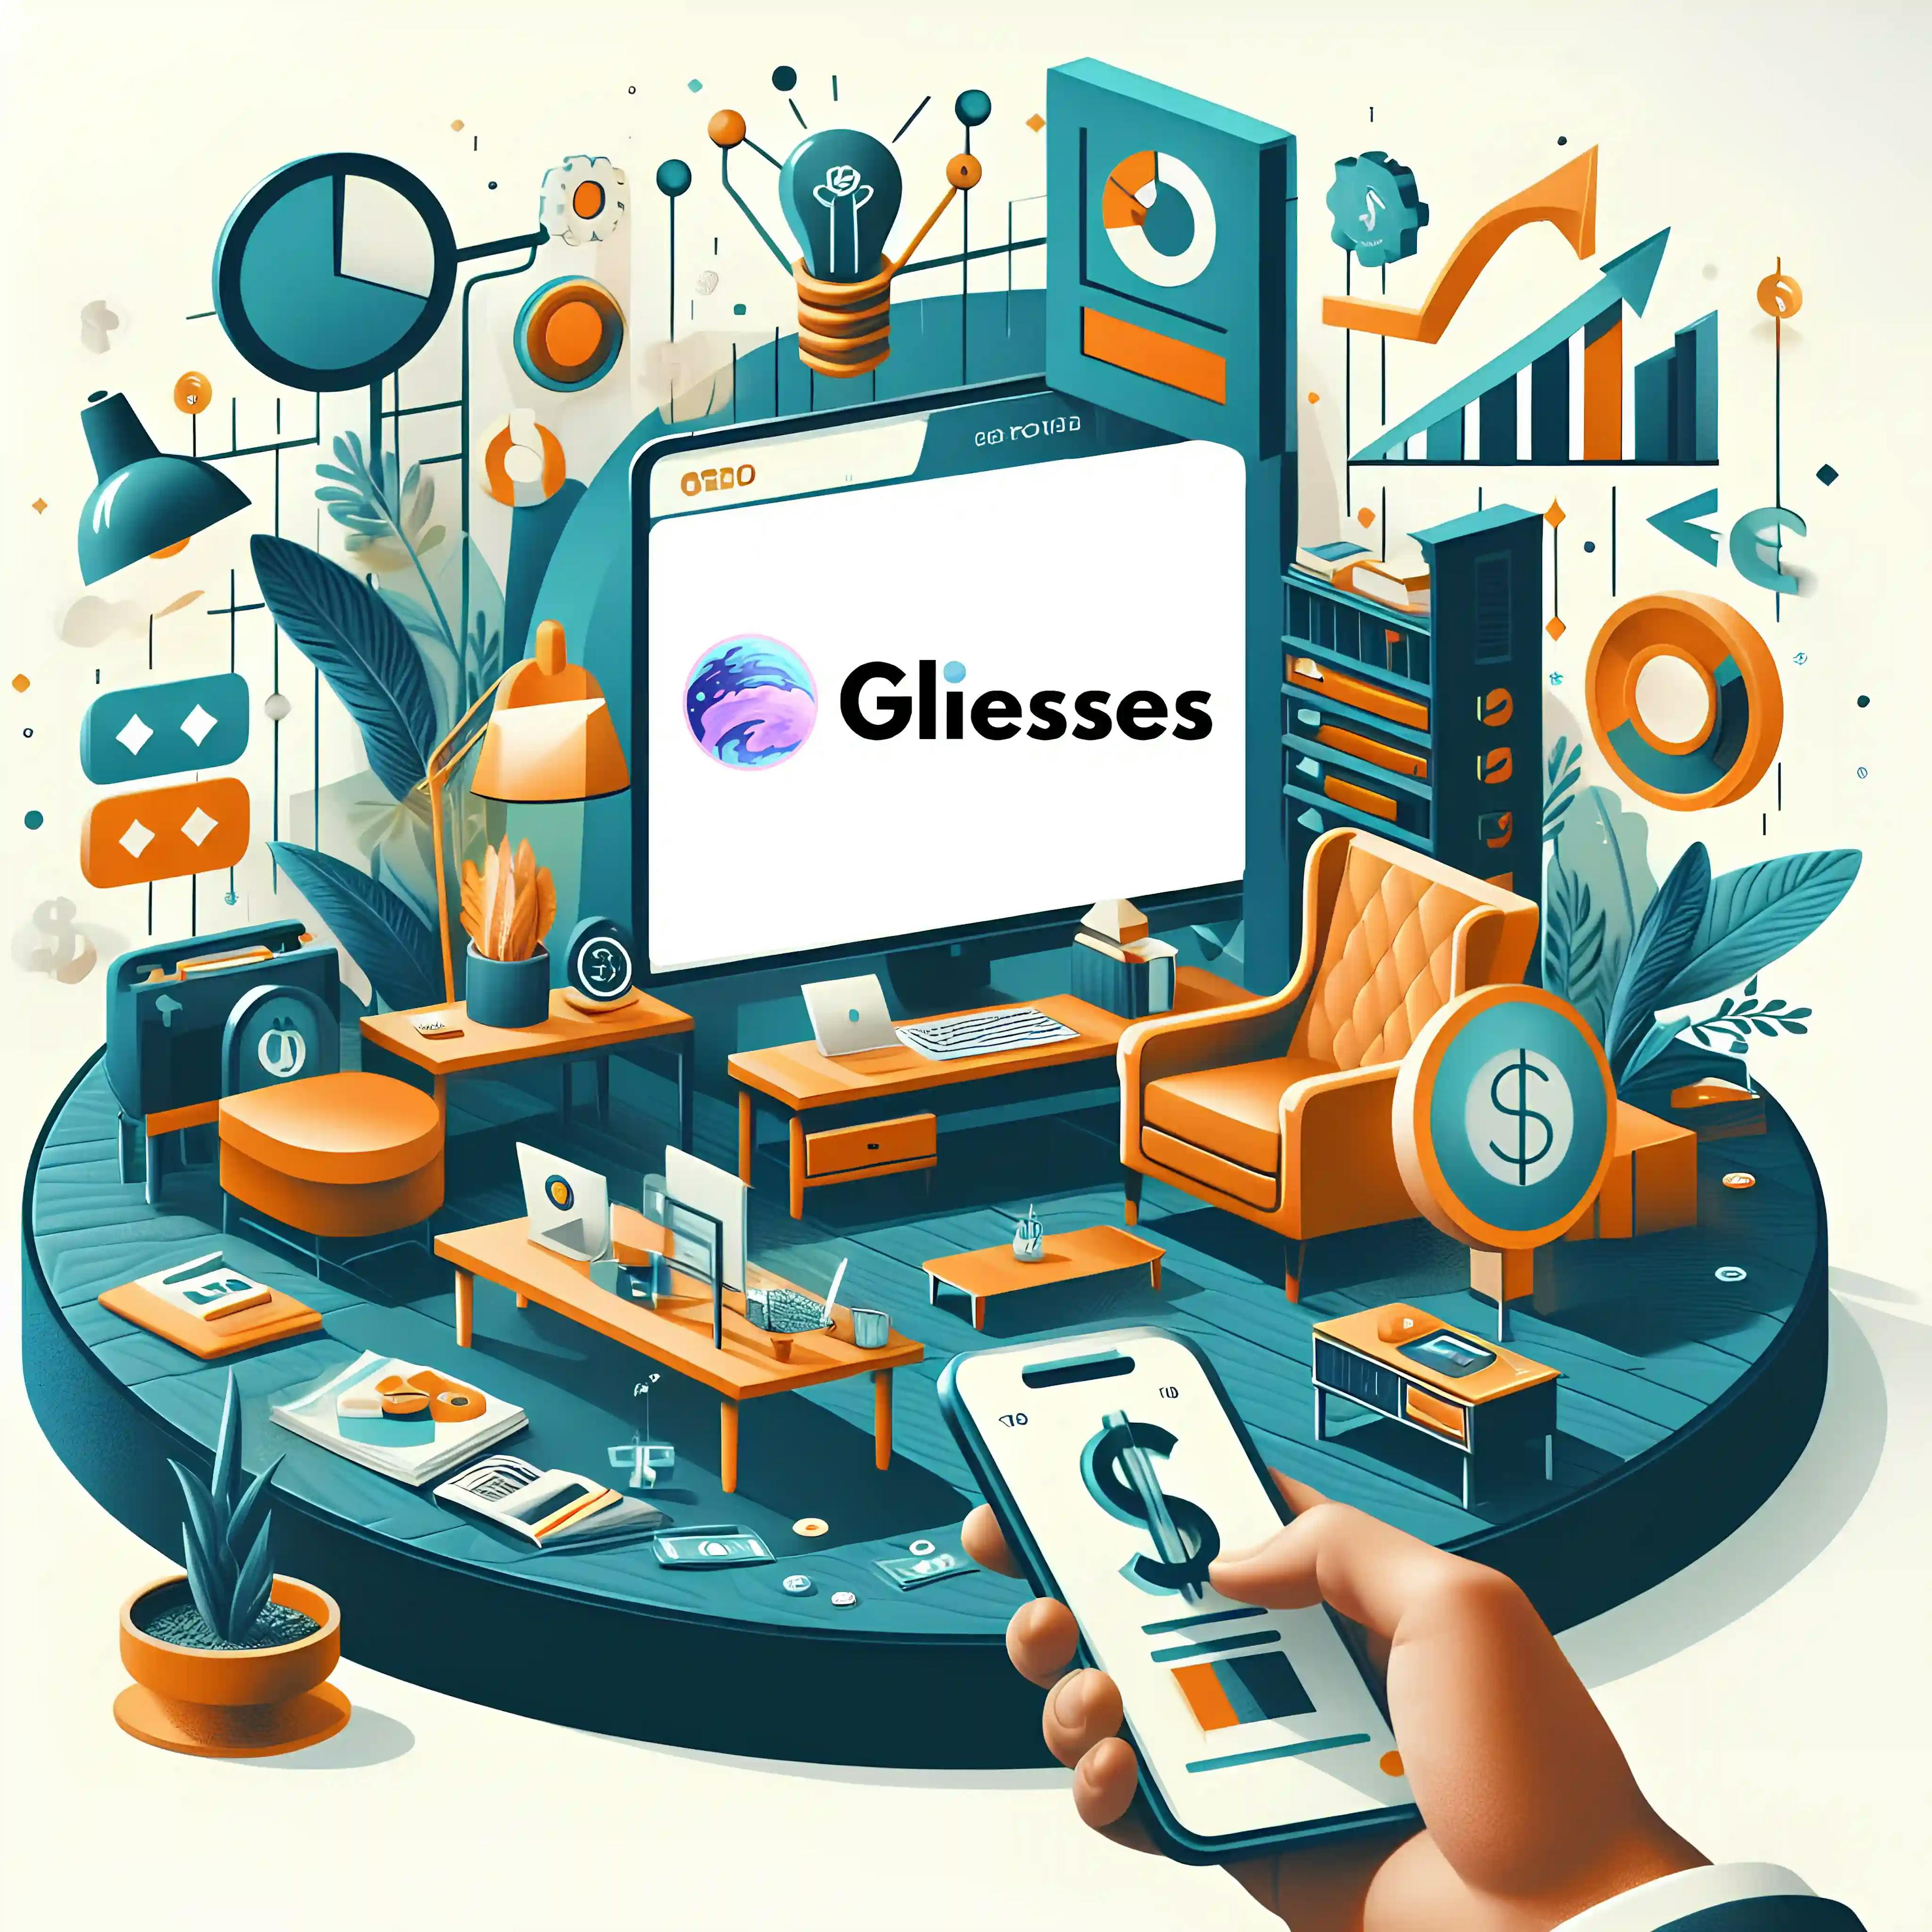 Gliesess paid web design agency